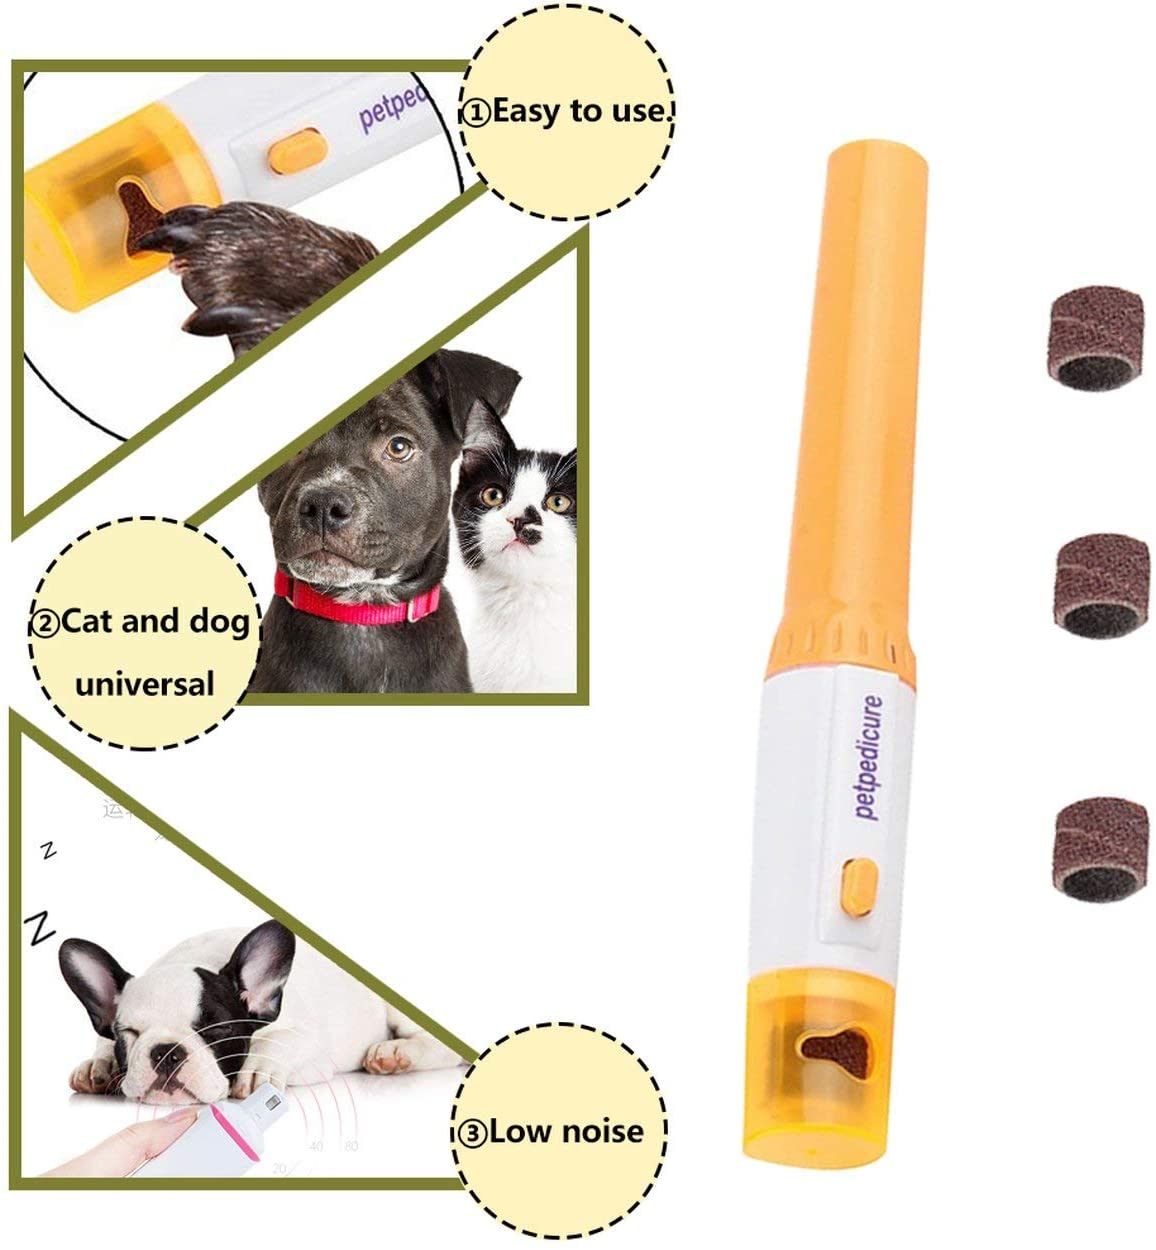  Tijeras eléctricas Kit de Lima de uñas Manicura para Mascotas Perro Gato Clipper Trimmer Grinder Pet Nail Grooming Grinder-Orange (BCVBFGCXVB) 